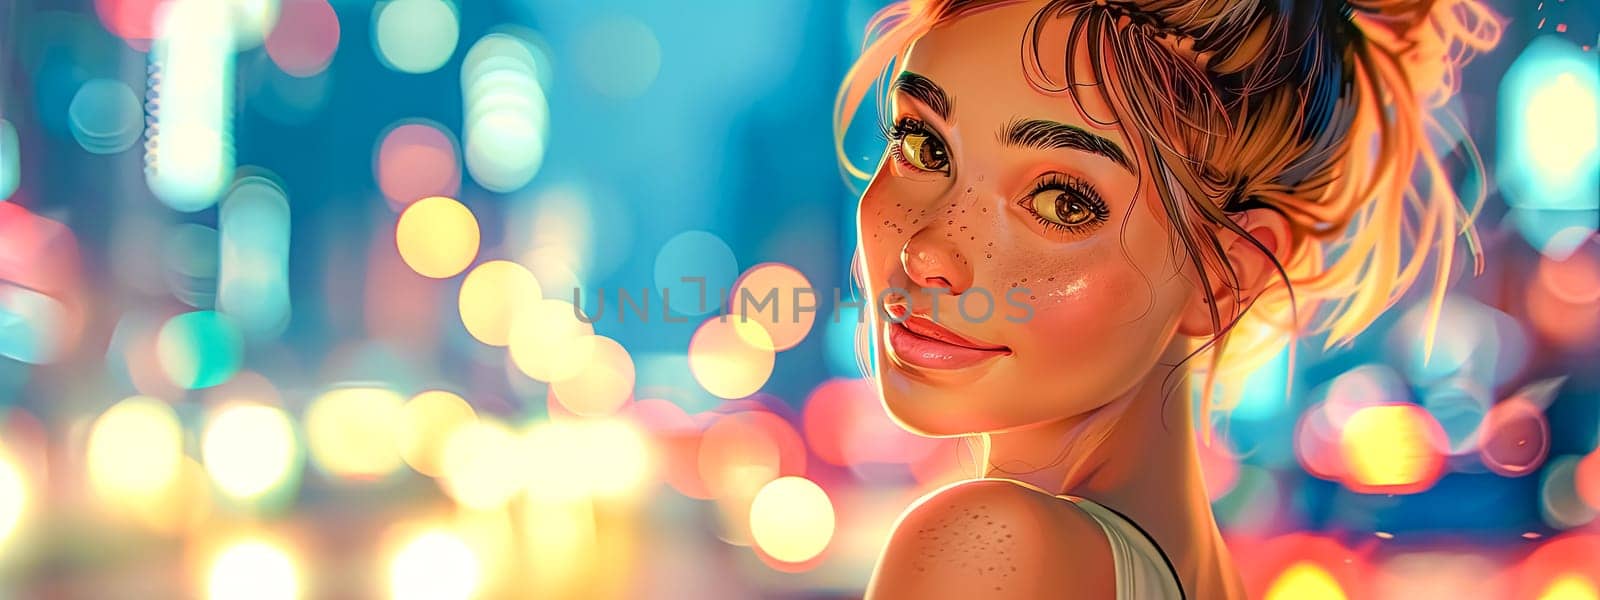 Digital Portrait of a Woman with Bokeh Lights by Edophoto